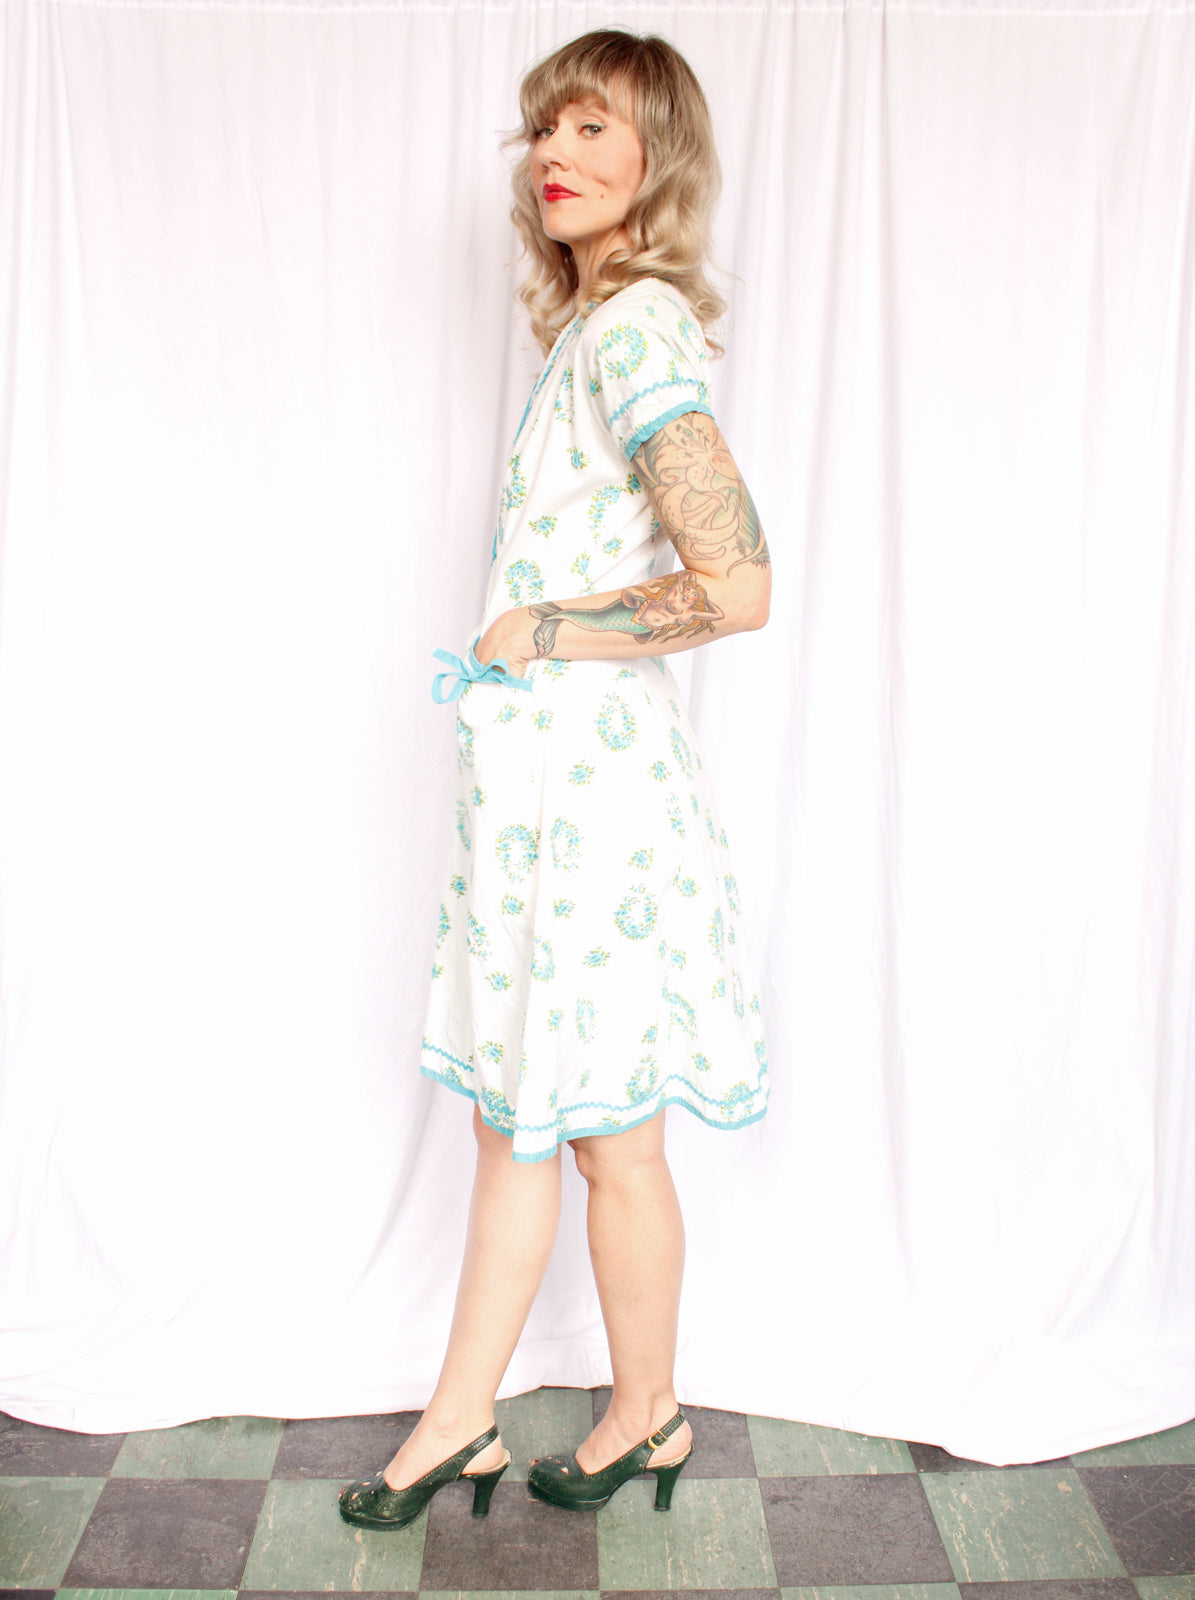 1950s Valley Frocks Cotton Dress - Medium